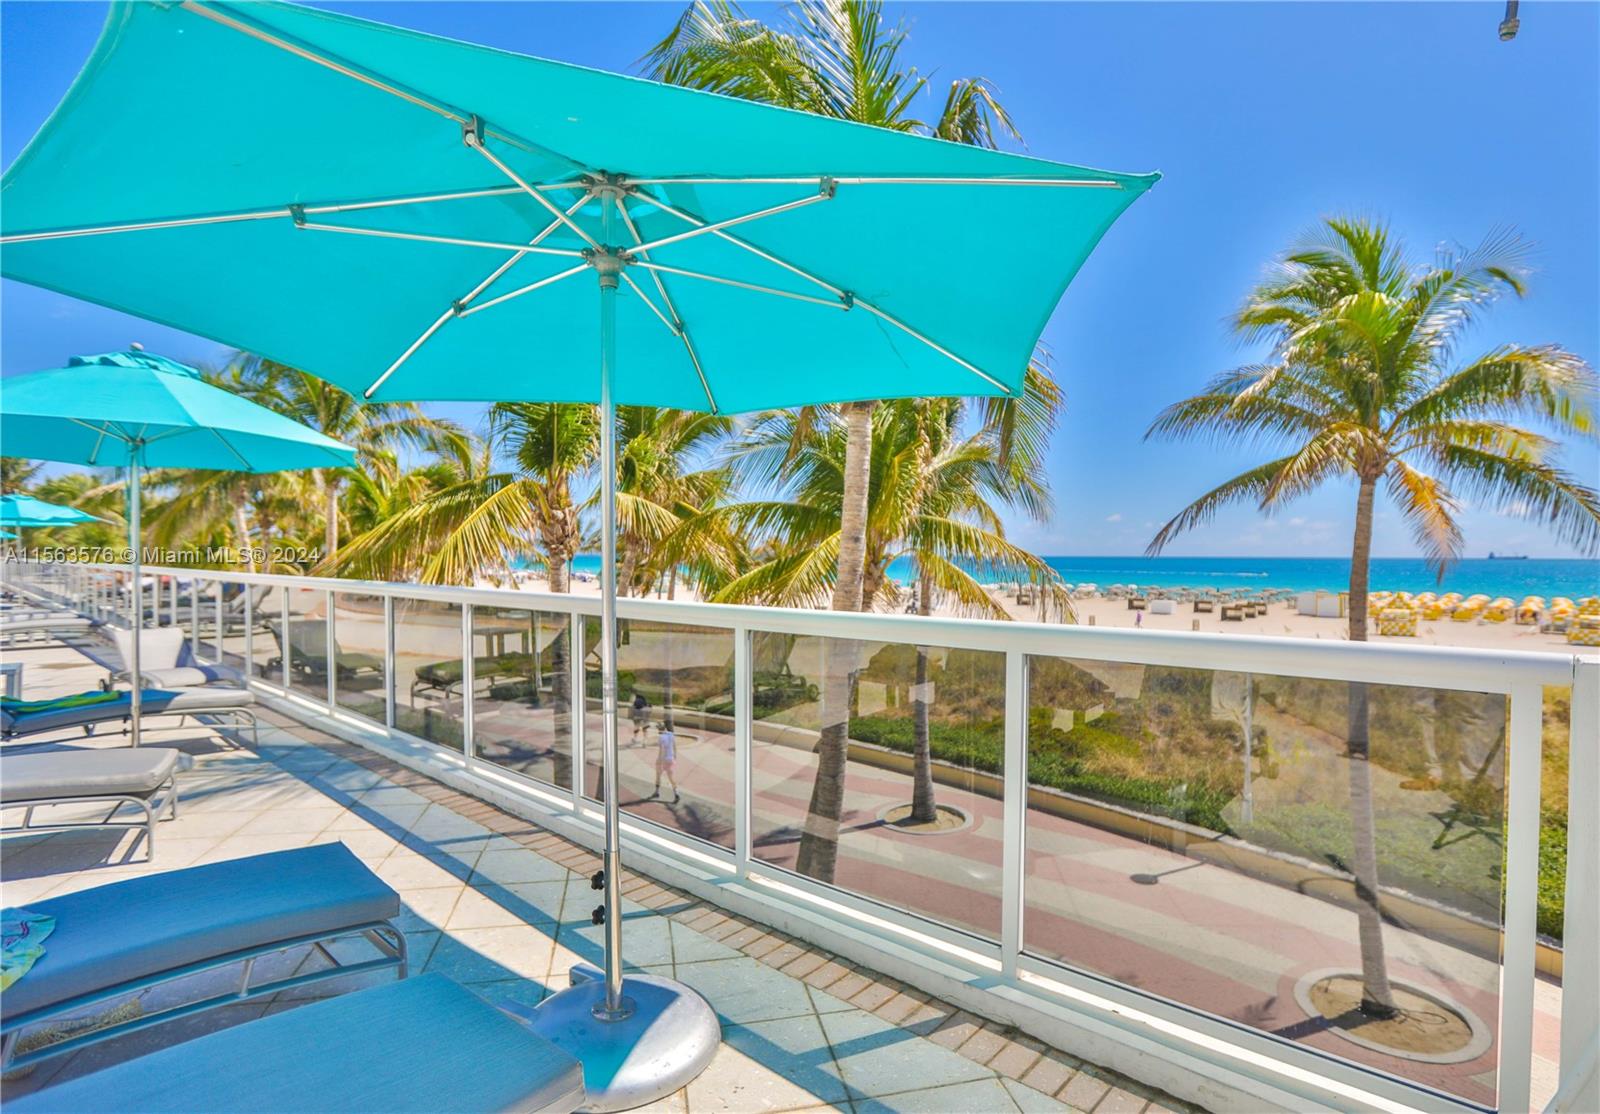 Property for Sale at 100 Lincoln Rd 914, Miami Beach, Miami-Dade County, Florida - Bedrooms: 2 
Bathrooms: 2  - $757,000